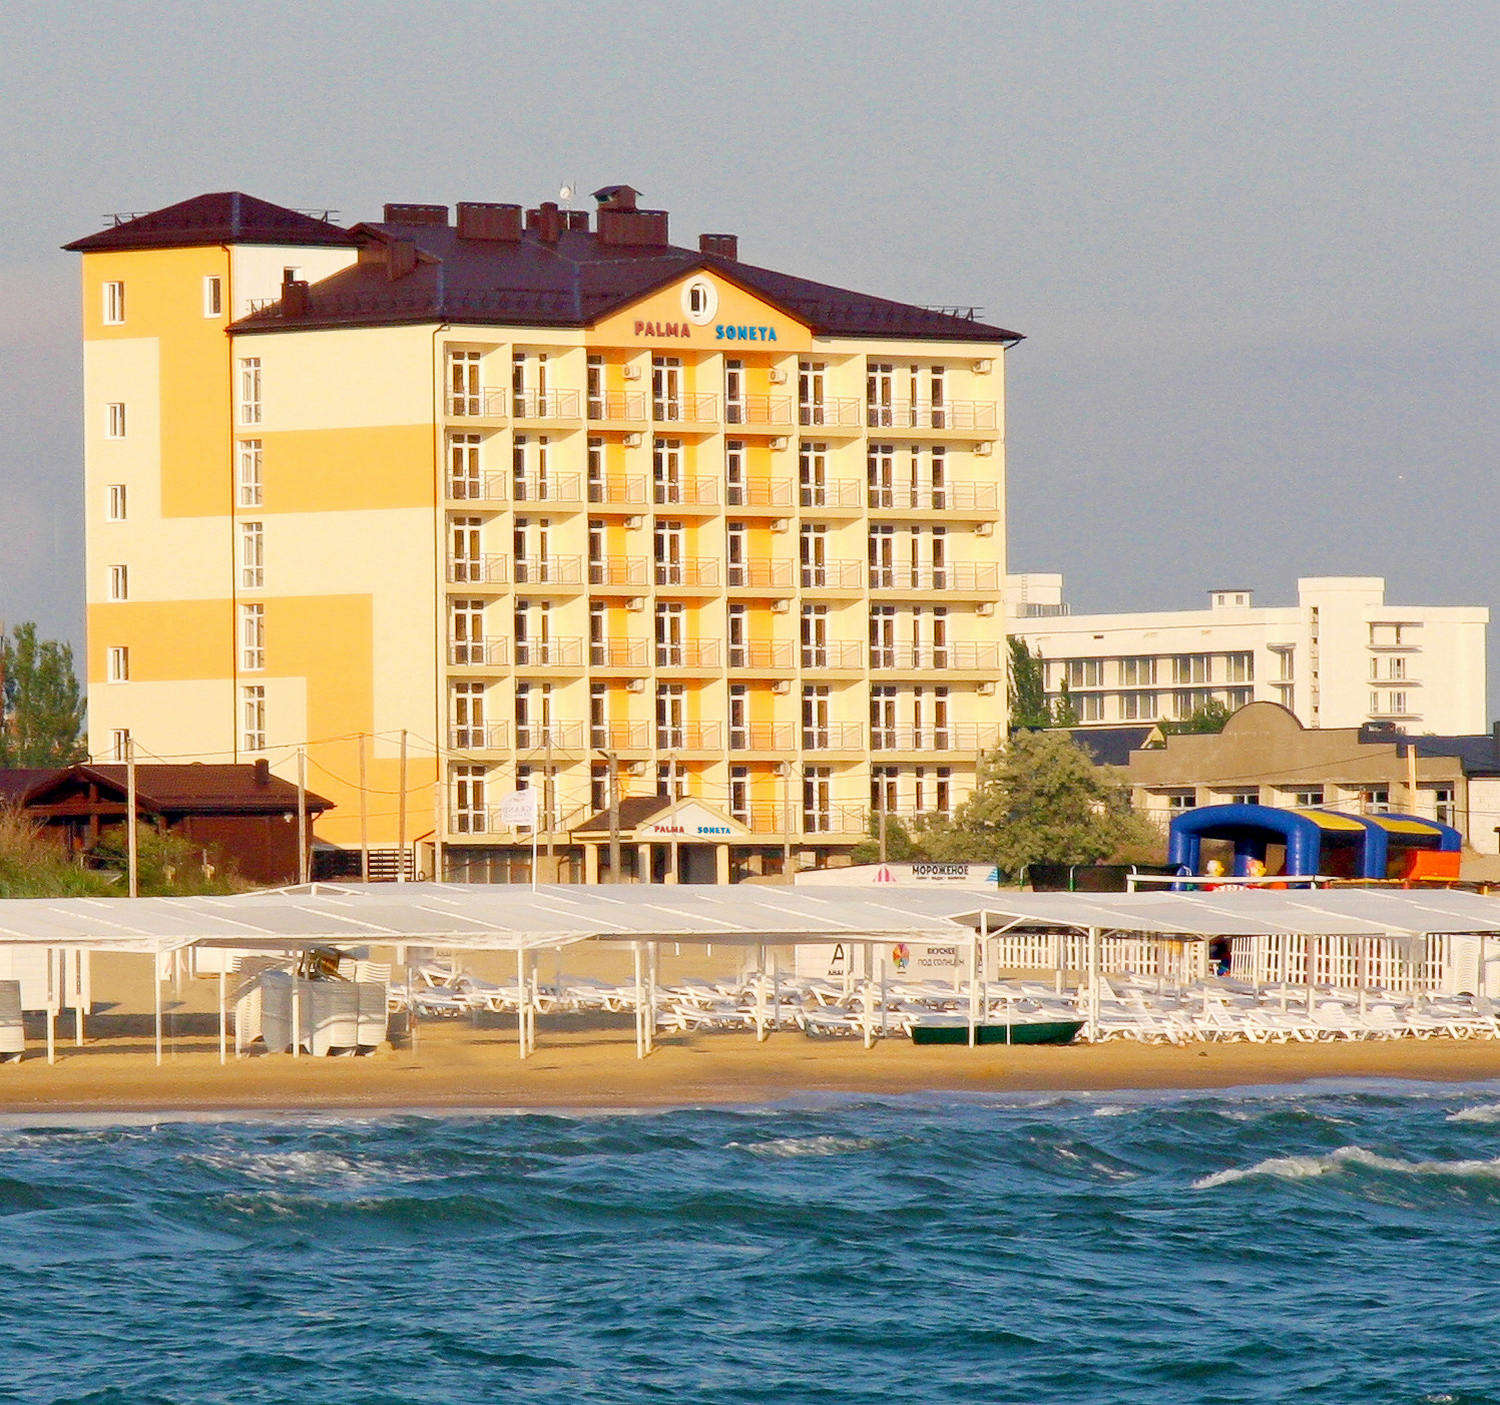 Отель "Palma Soneta" 